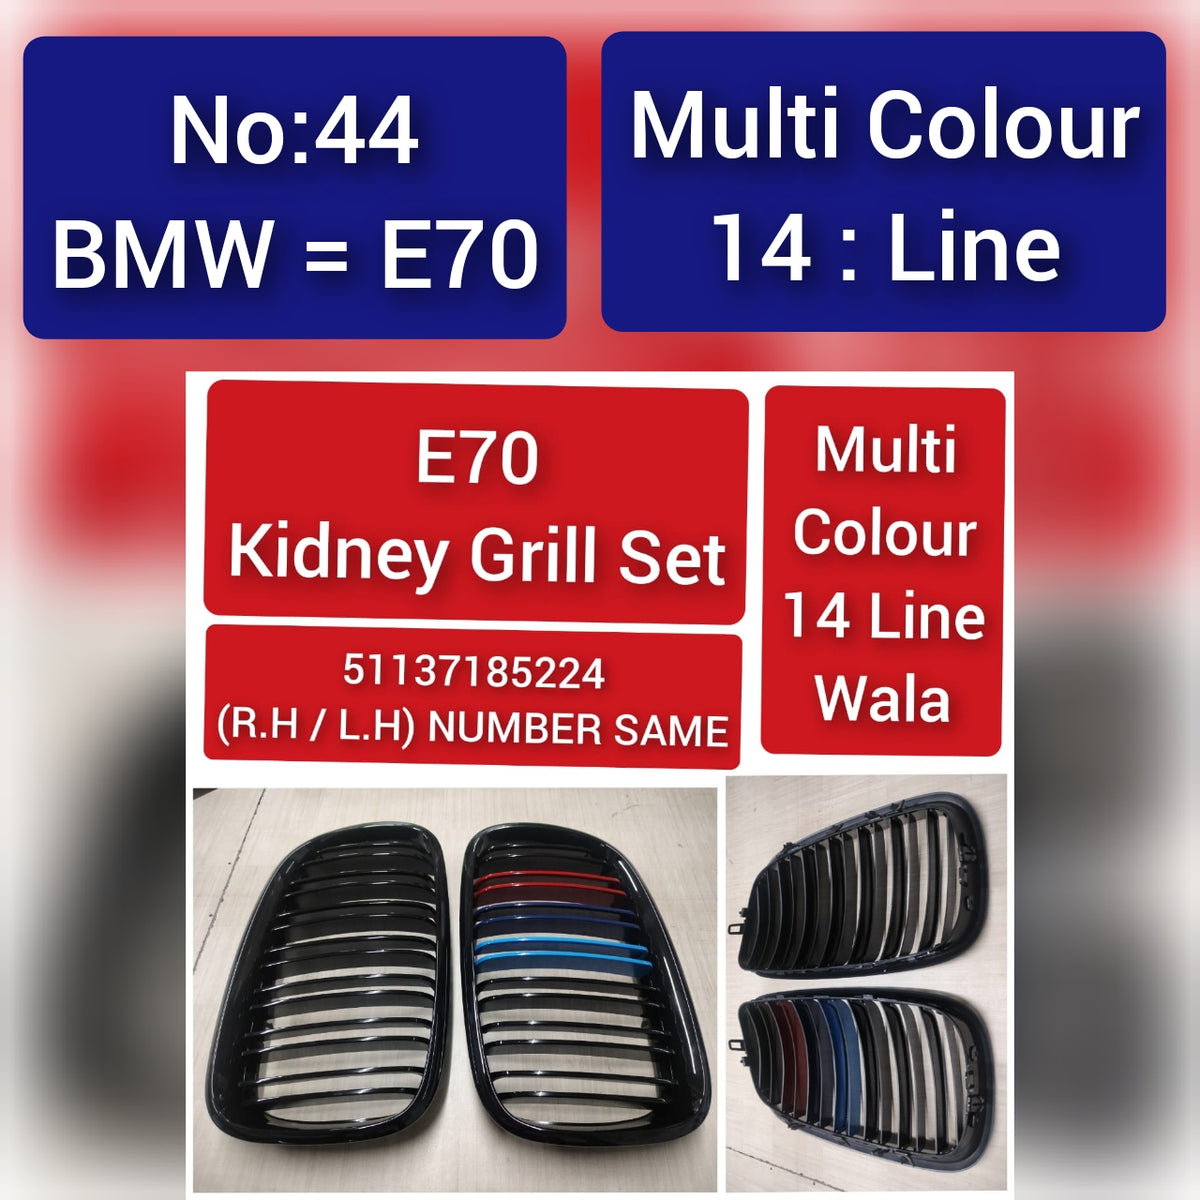 BMW = E70 Multi Colour 14: Line , E70 Kidney Grill Set 51137185224 (R.H/L.H) NUMBER SAME Multi Colour Wala 14 Line Tag 44